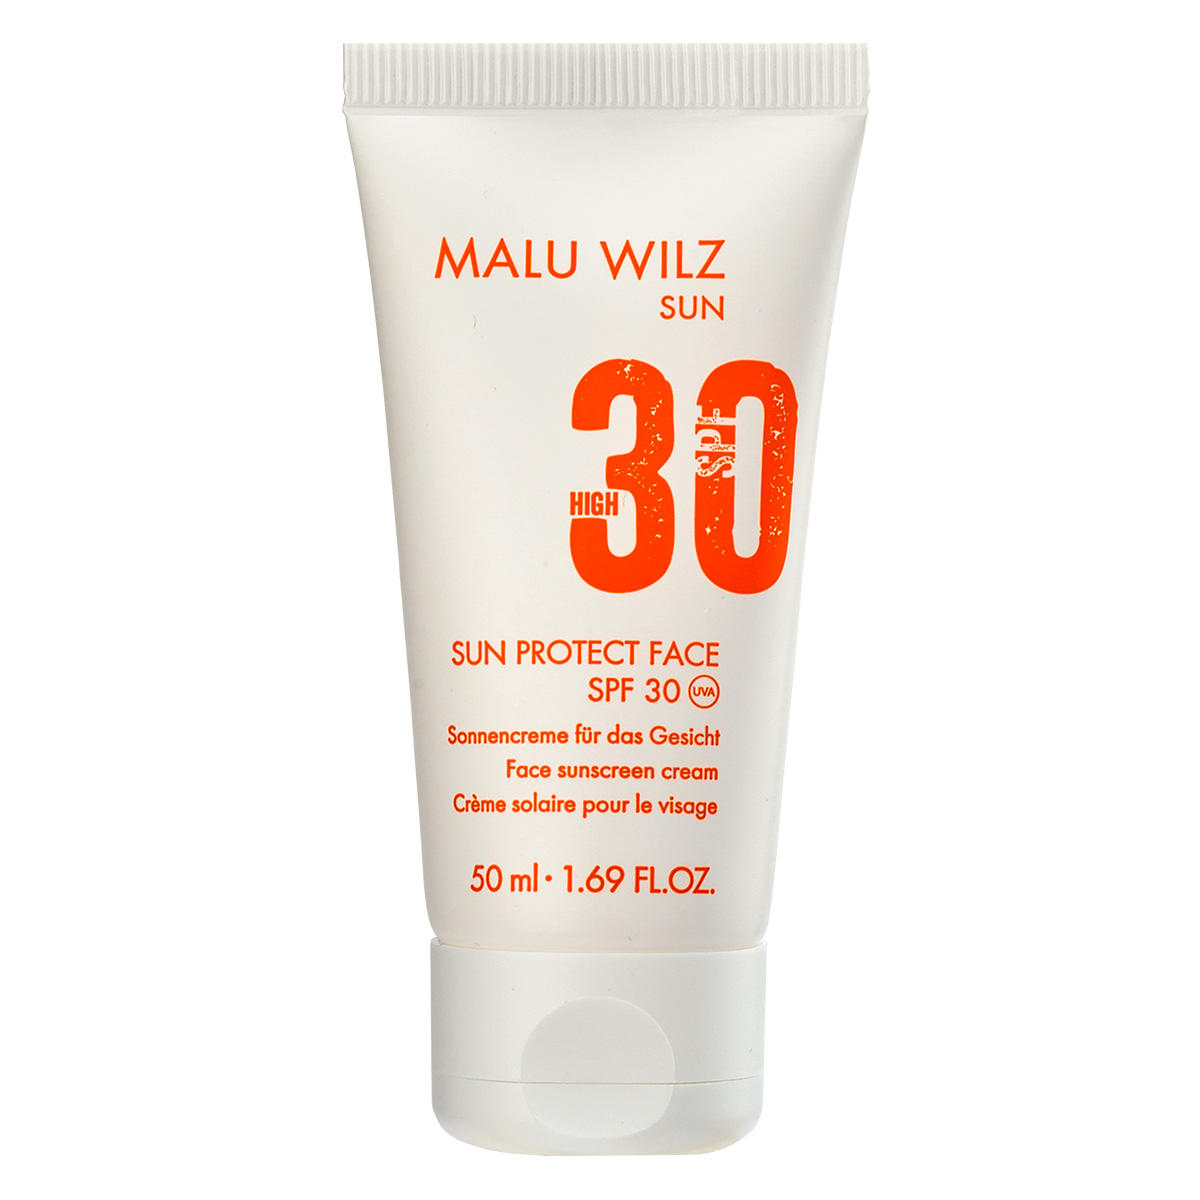 Malu Wilz Sun Sun Protect Face SPF 30 50 ml - 1